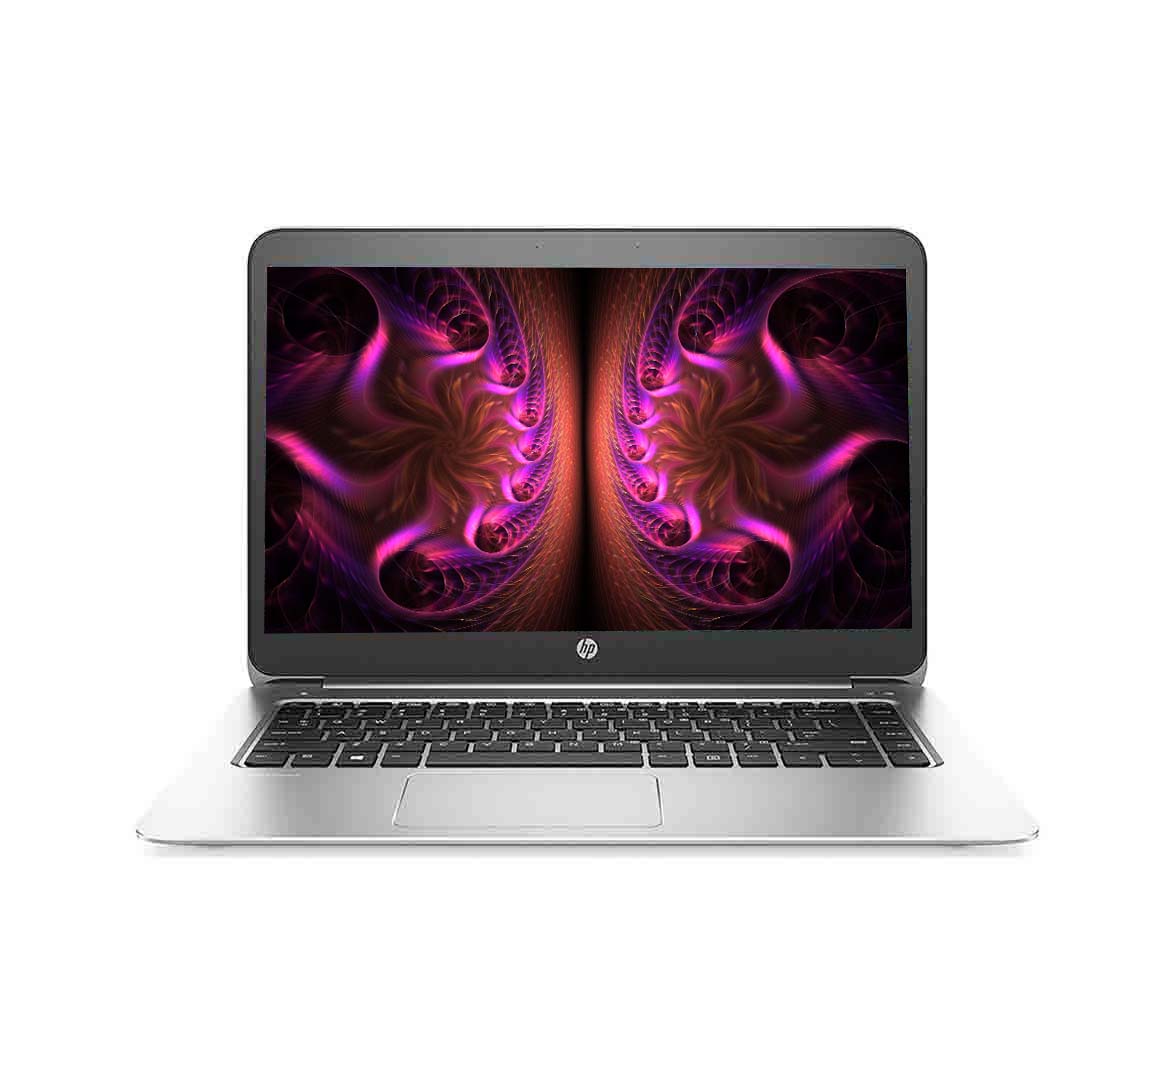 HP EliteBook 2570p 12,5 i5 - 16Go RAM 500Go HDD Windows 10